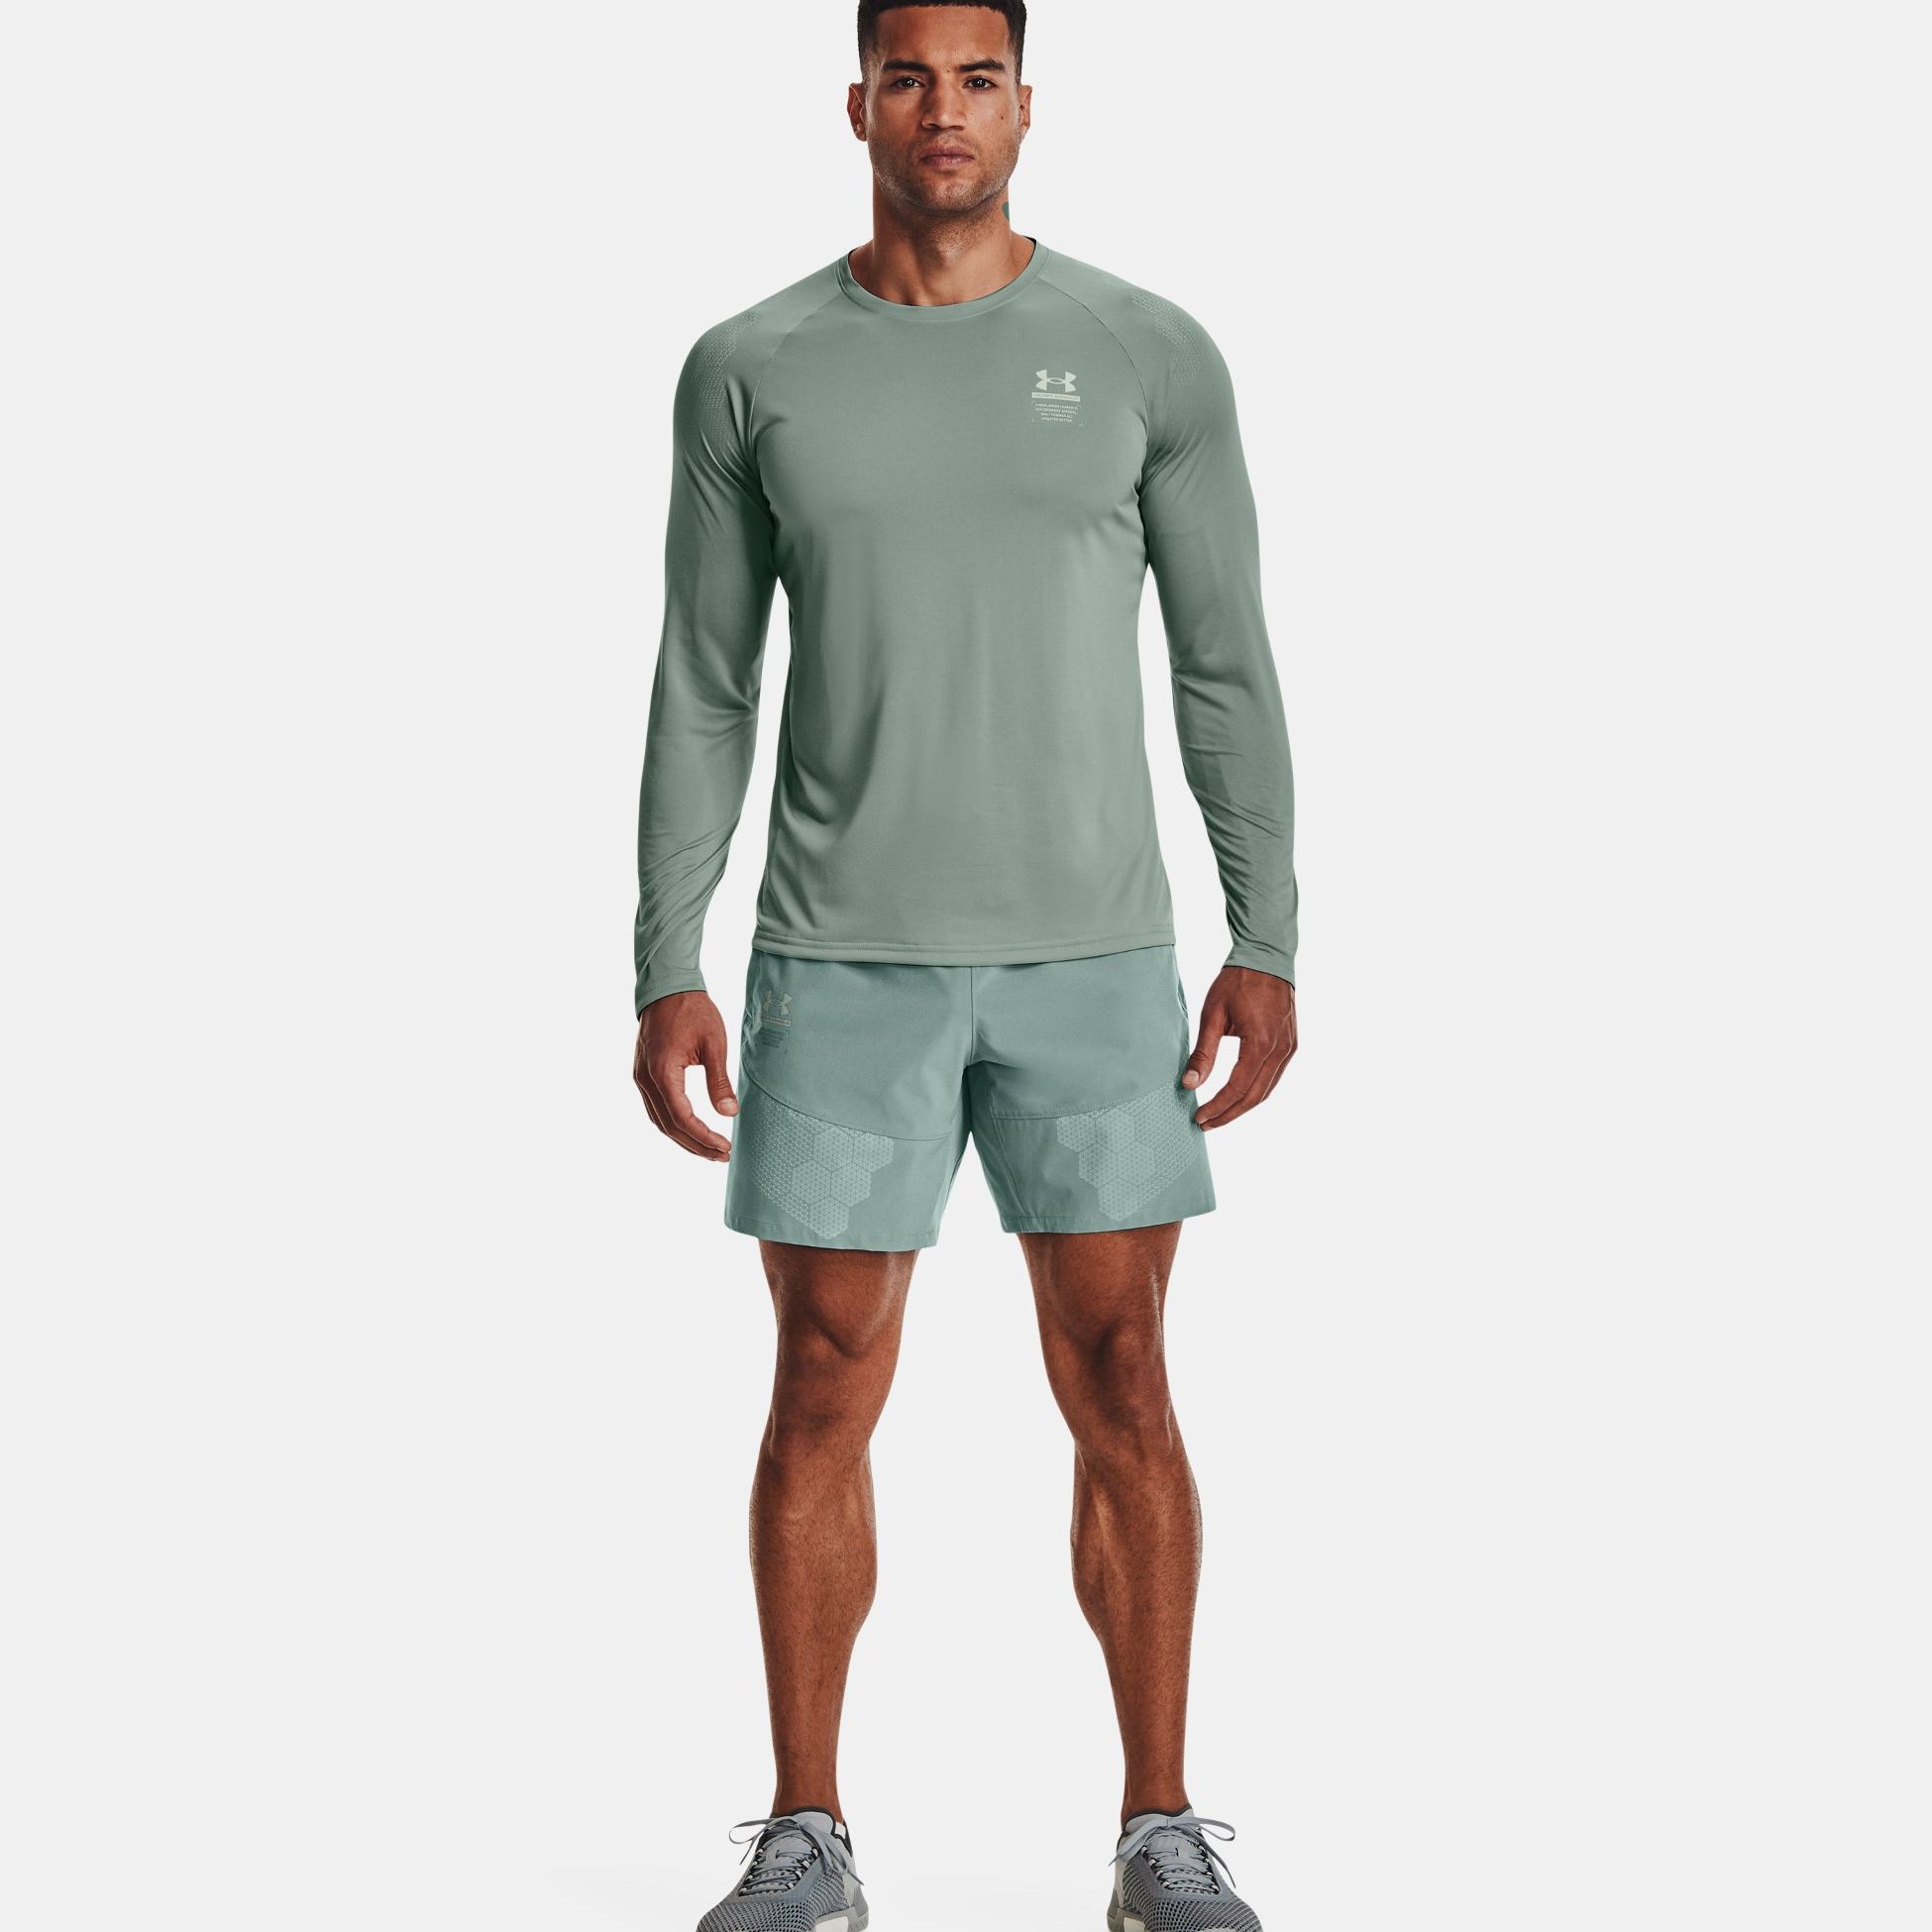 Sweatshirts -  under armour UA ArmourPrint Long Sleeve